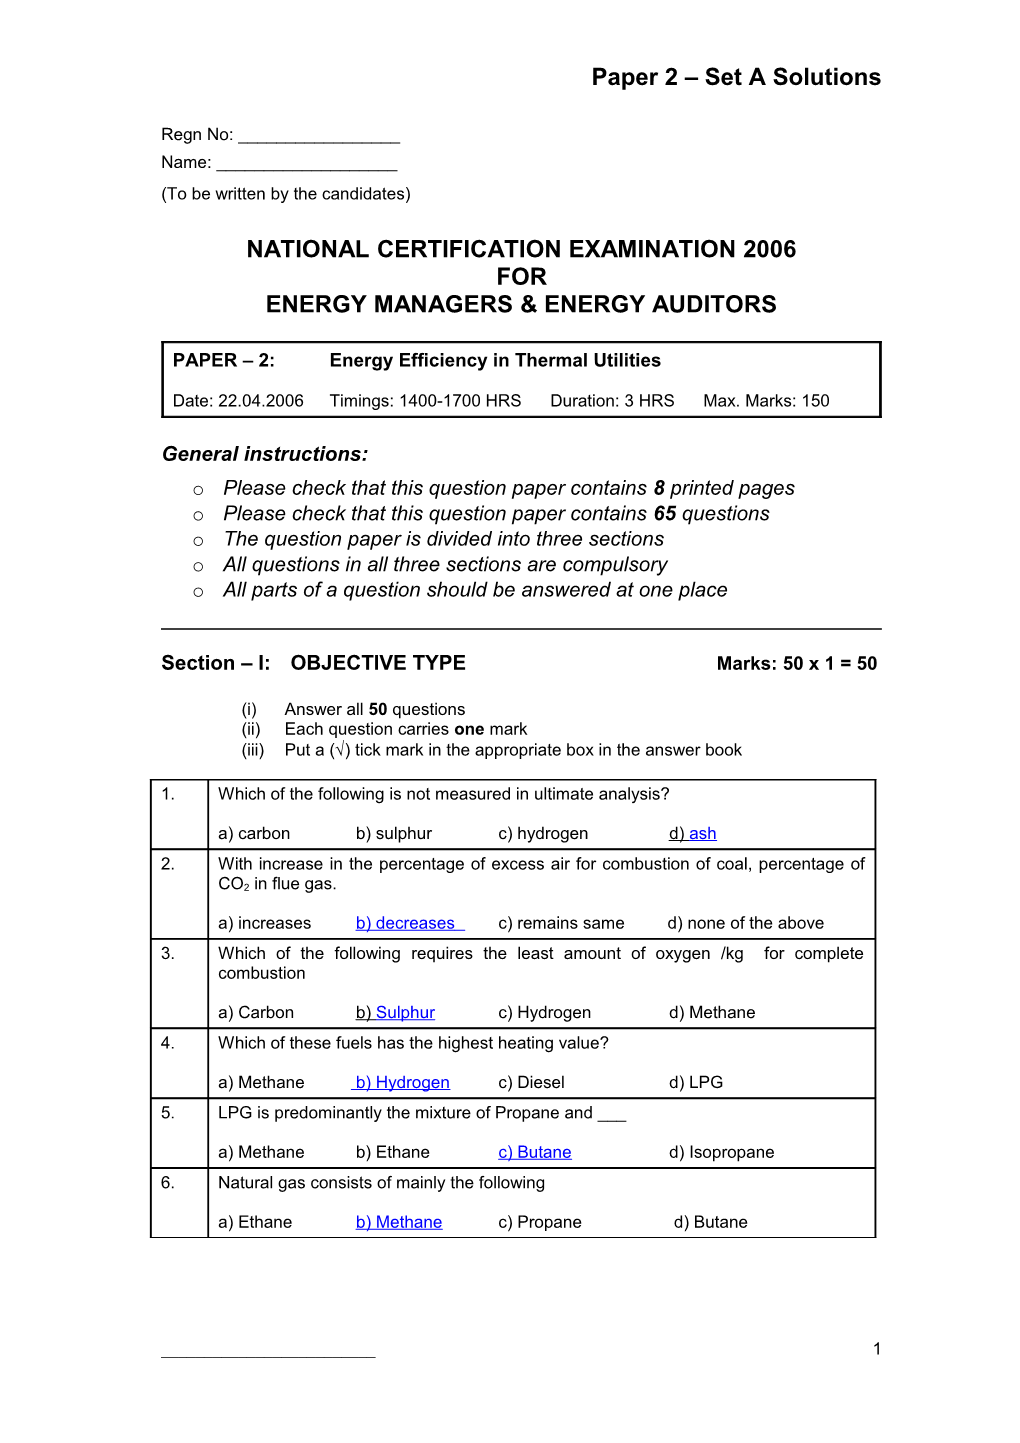 National Certification Examination 2005